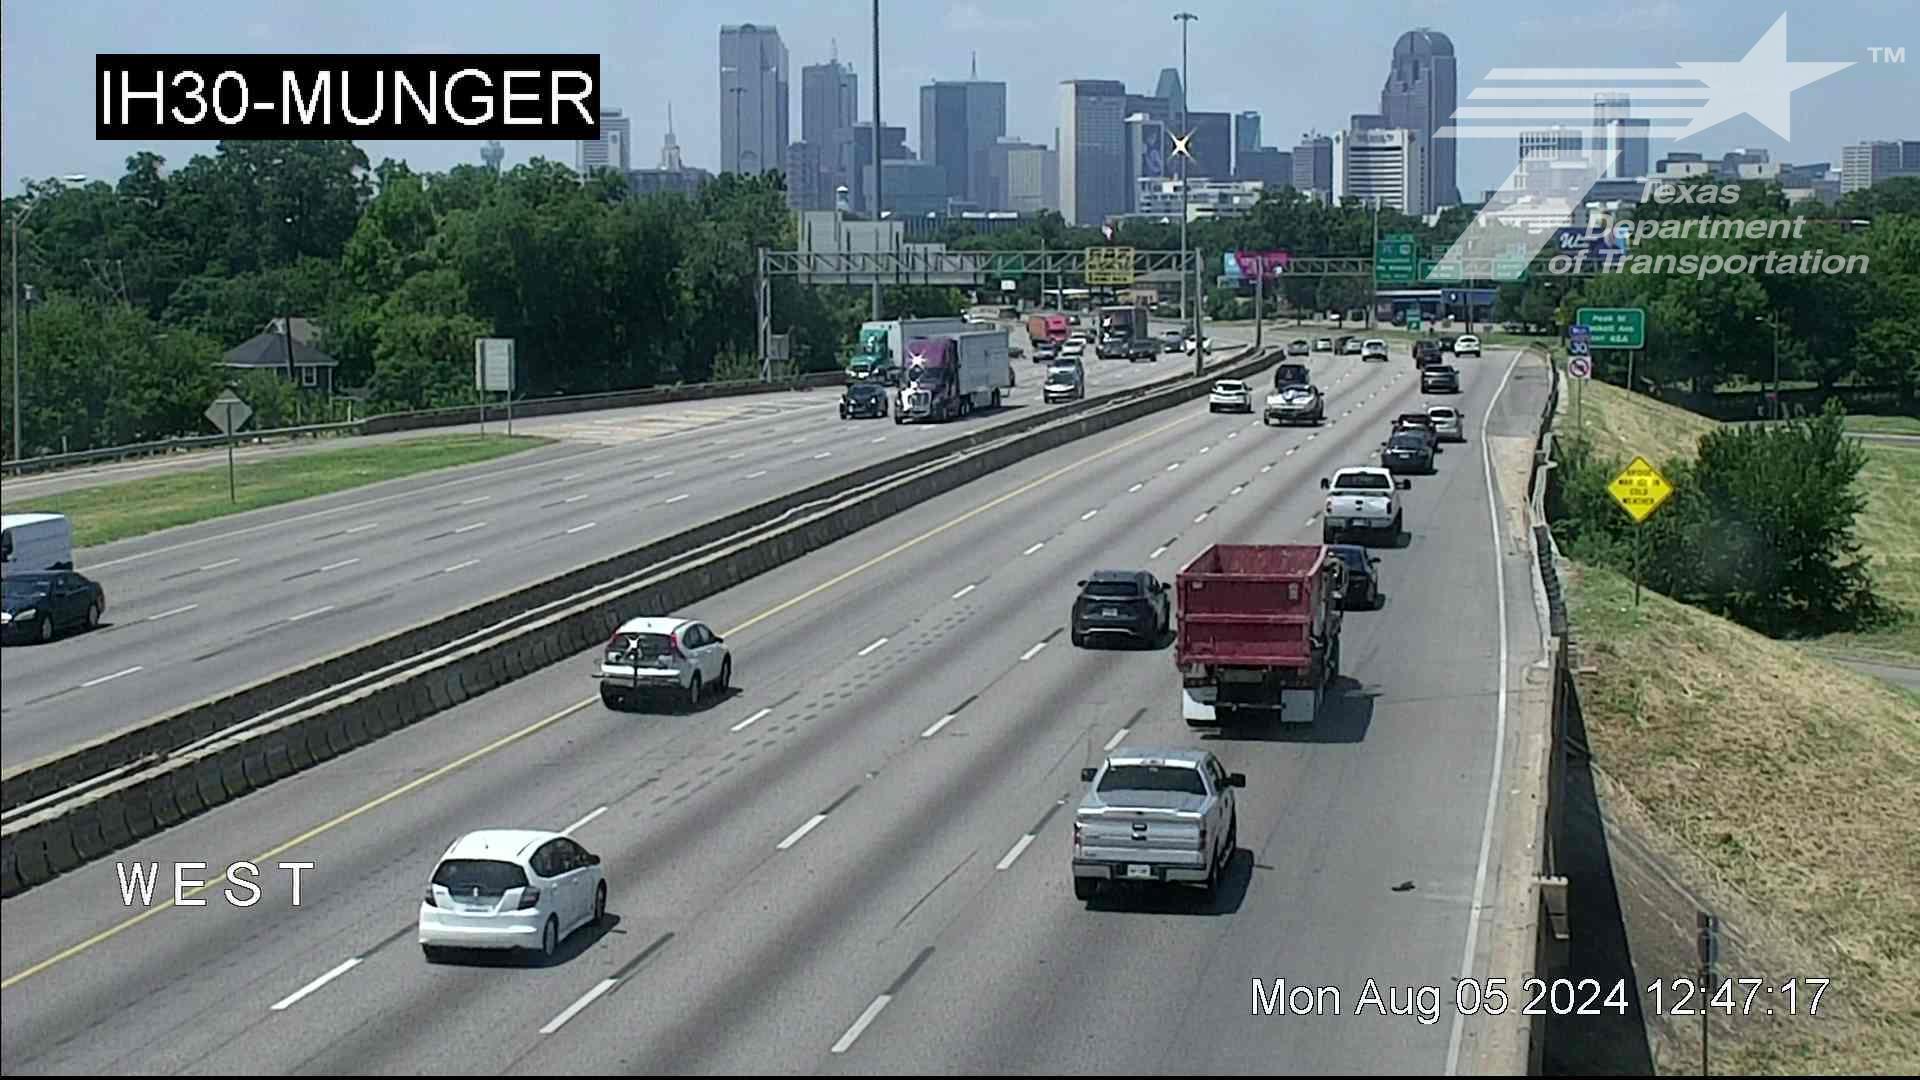 Traffic Cam Dallas › East: I-30 @ Munger